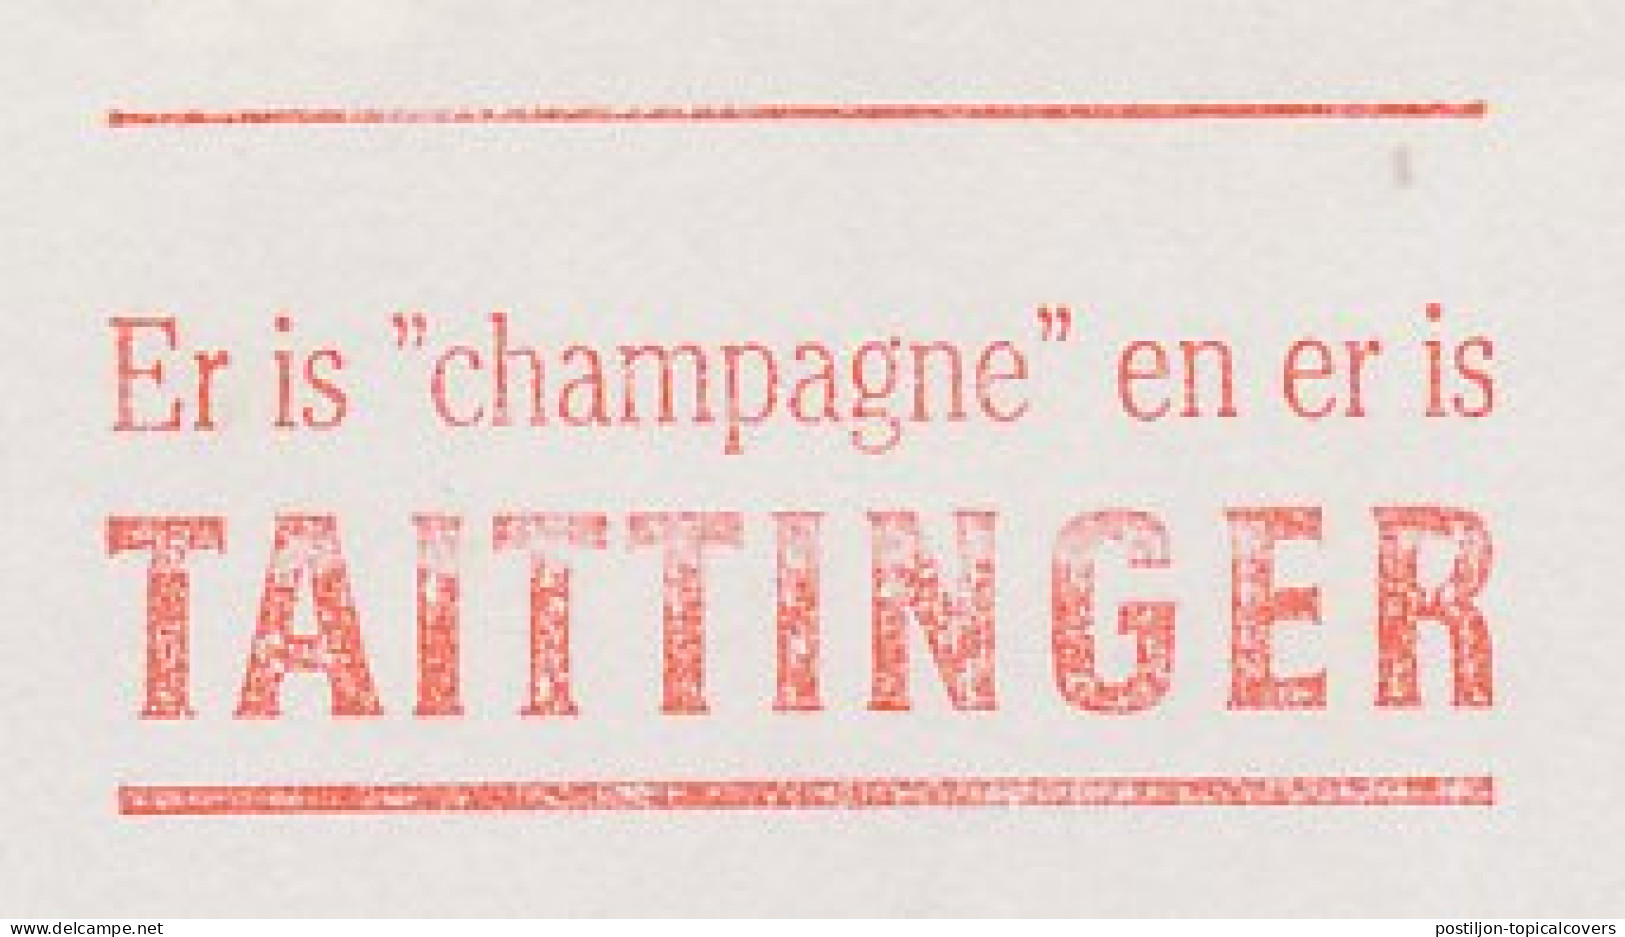 Meter Top Cut Netherlands 1988 Champagne - Taittinger - Vins & Alcools